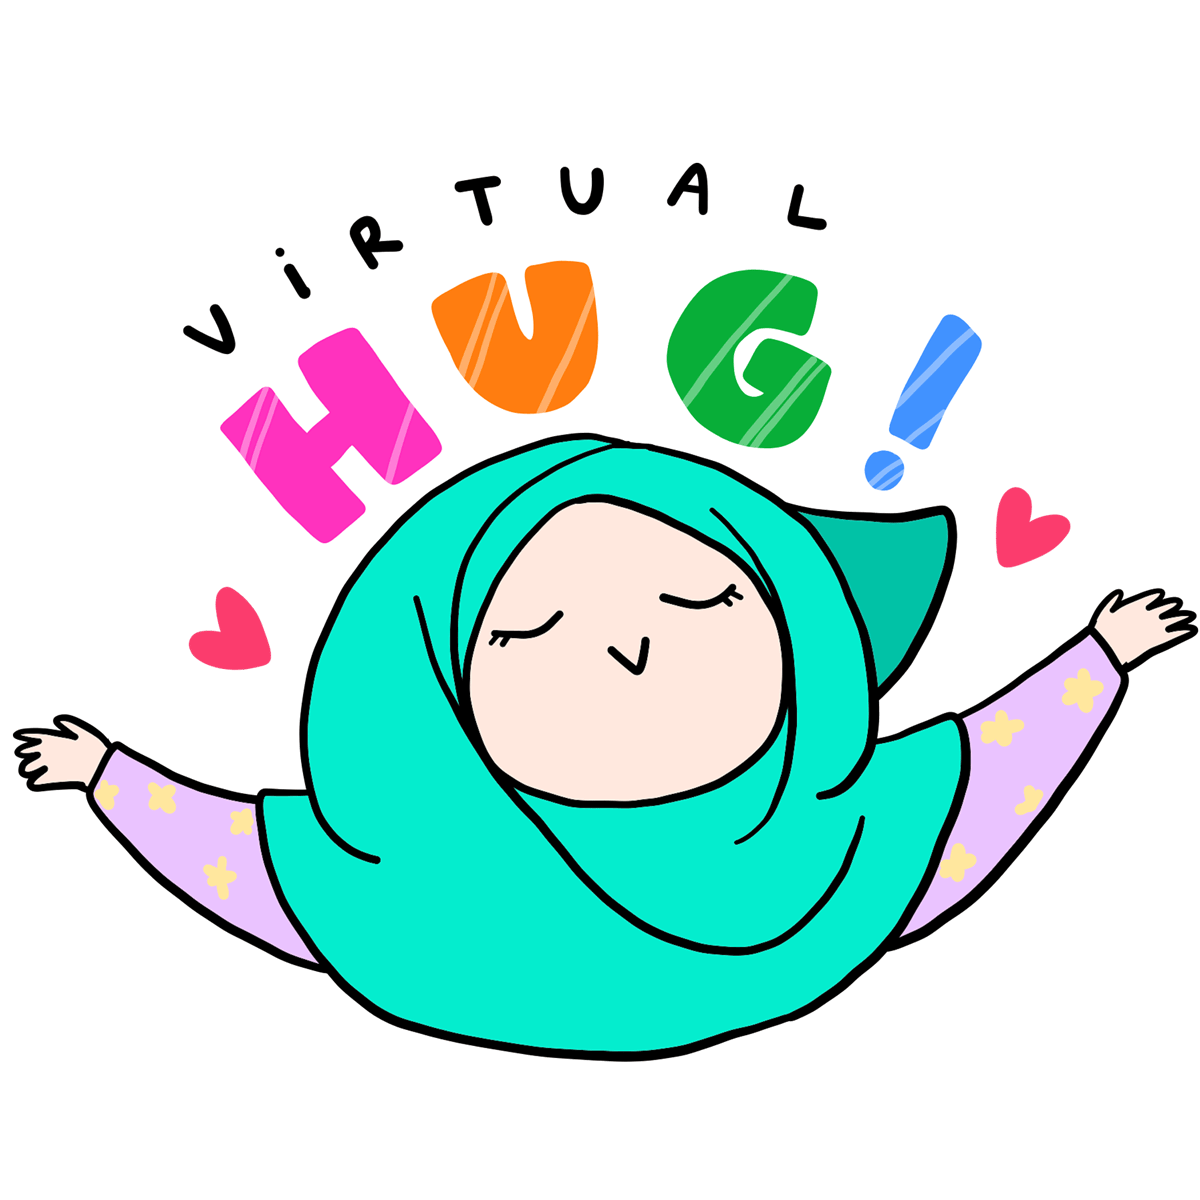 Hijab Virtual Hug GIF by ifalukis - Find & Share on GIPHY